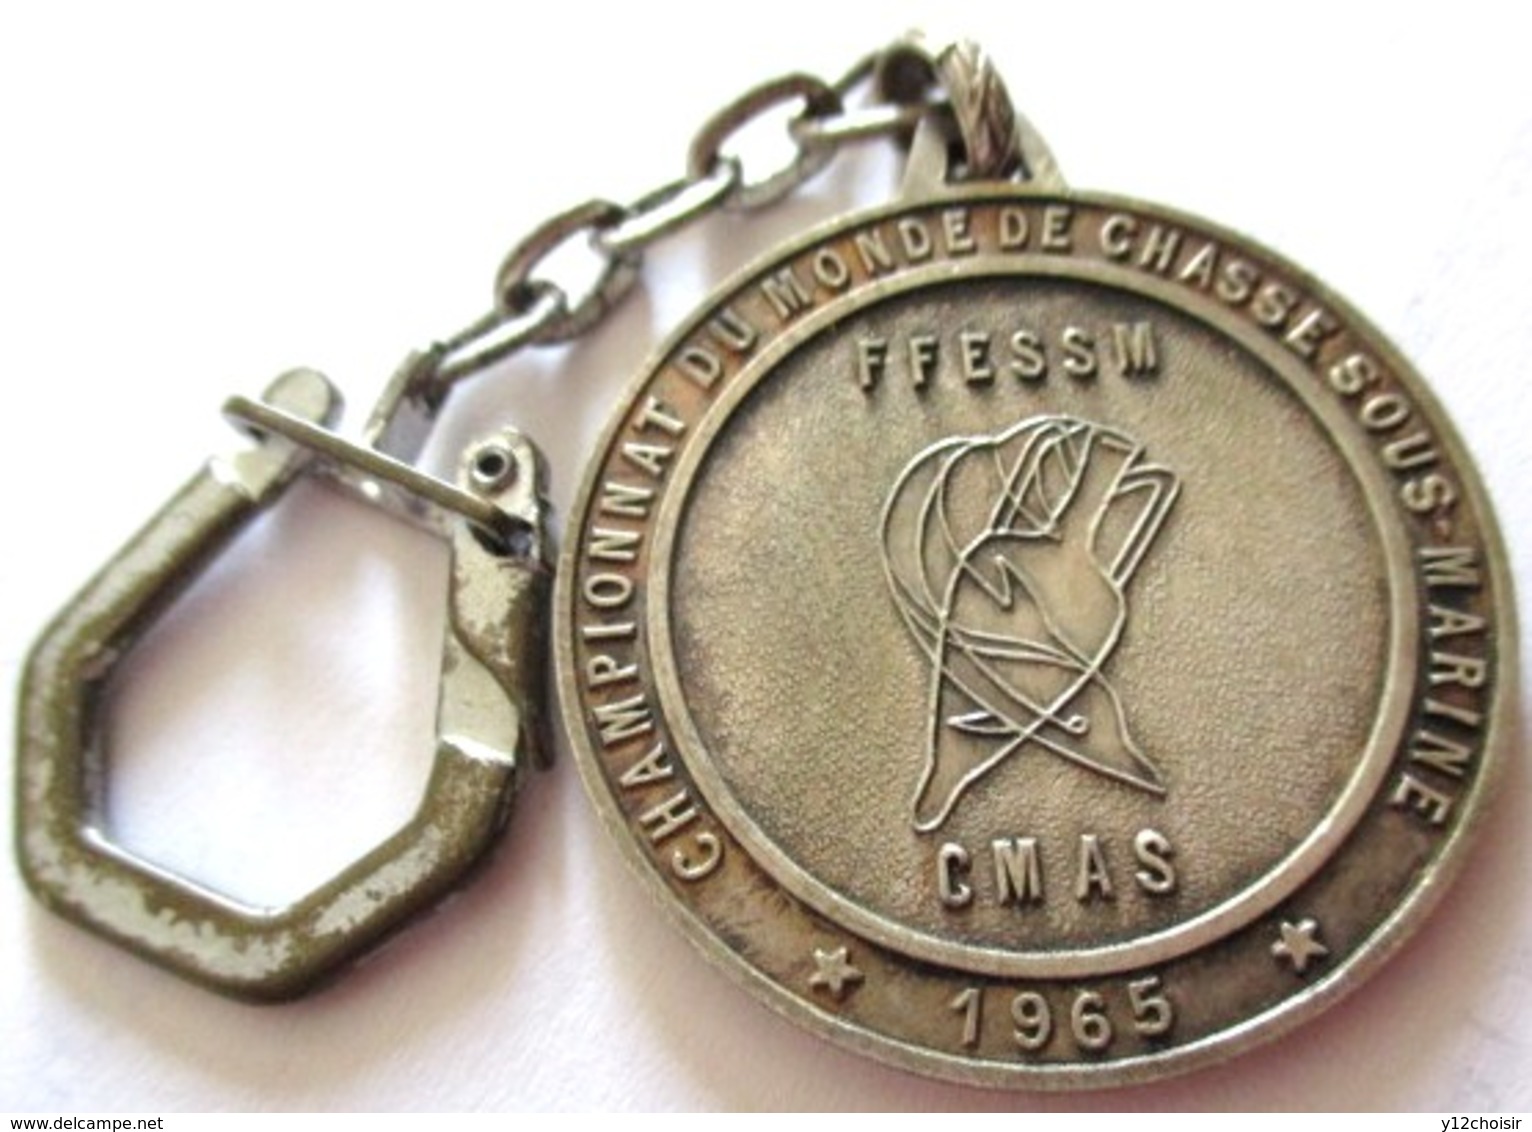 PORTE CLEFS COURTOIS PLONGEUR PLONGEE TAHITI RANGIROA 1965 CHAMPIONNAT DU MONDE DE CHASSE SOUS MARINE FFESSM CMAS - Key-rings